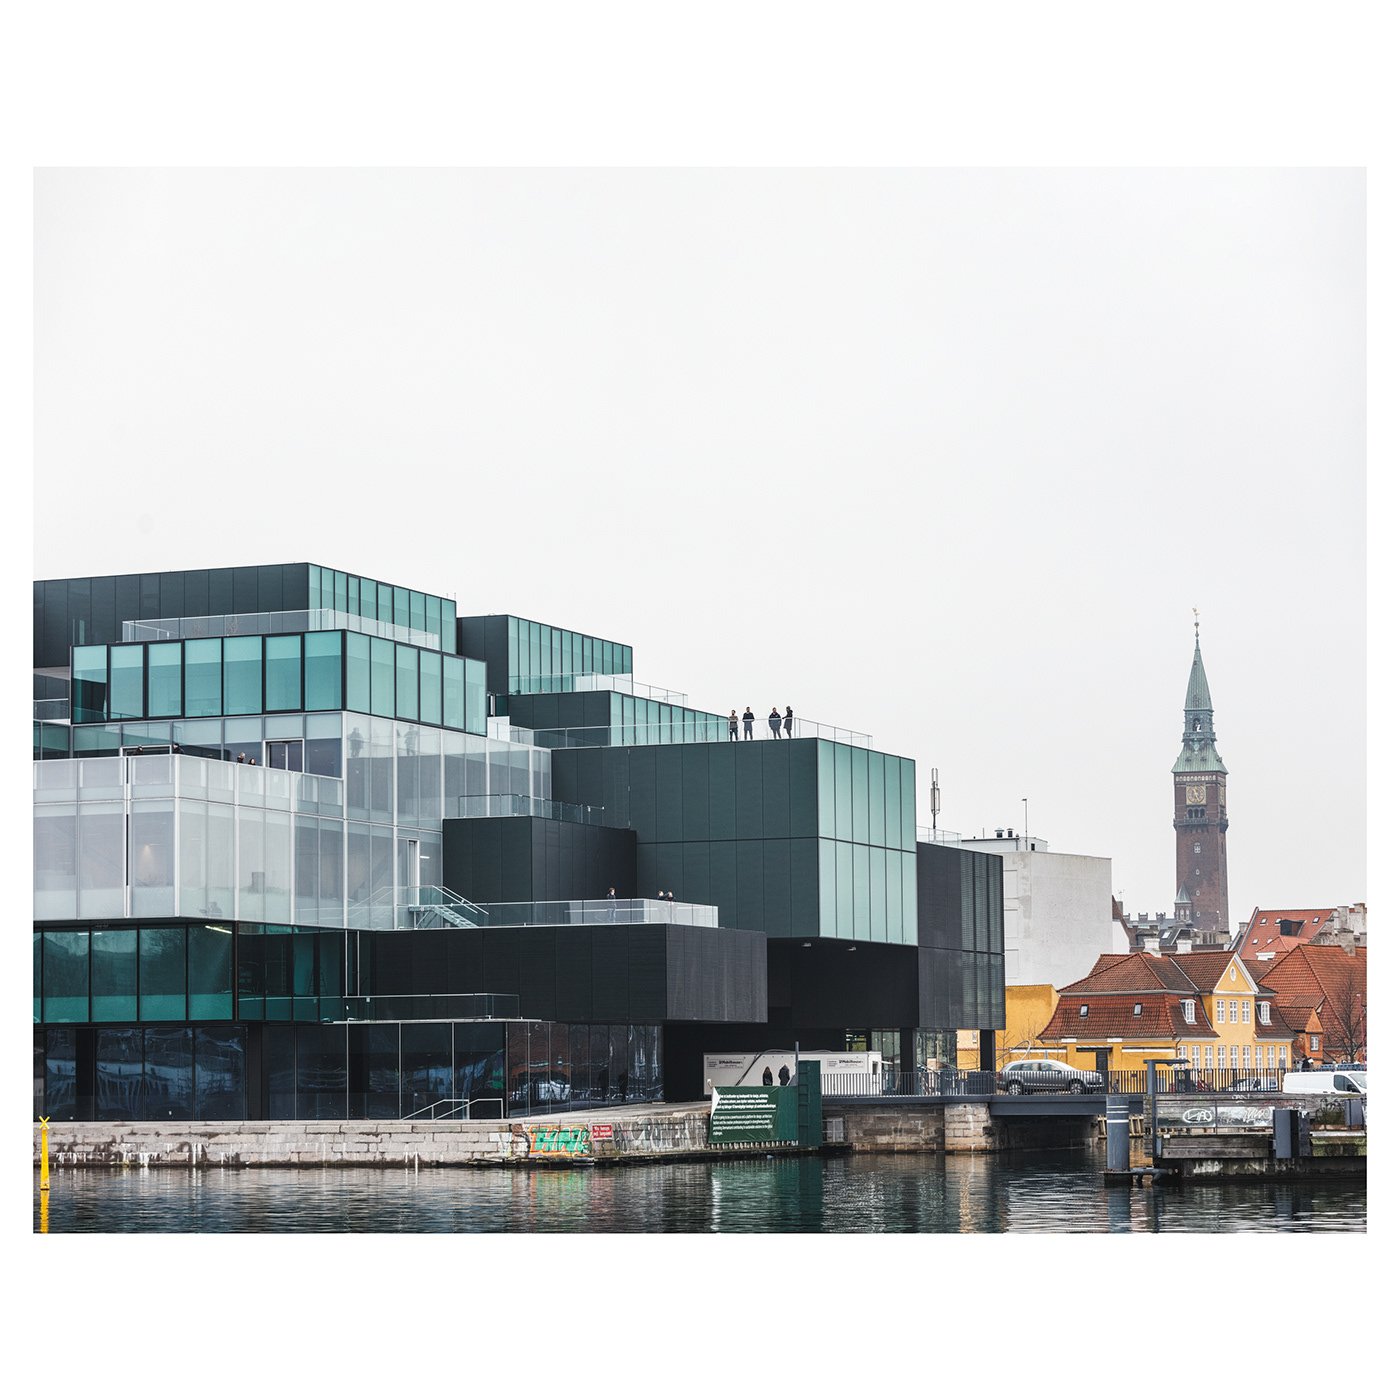 OMA koolhaas dutch danish architecture box concrete glass reflection harbour